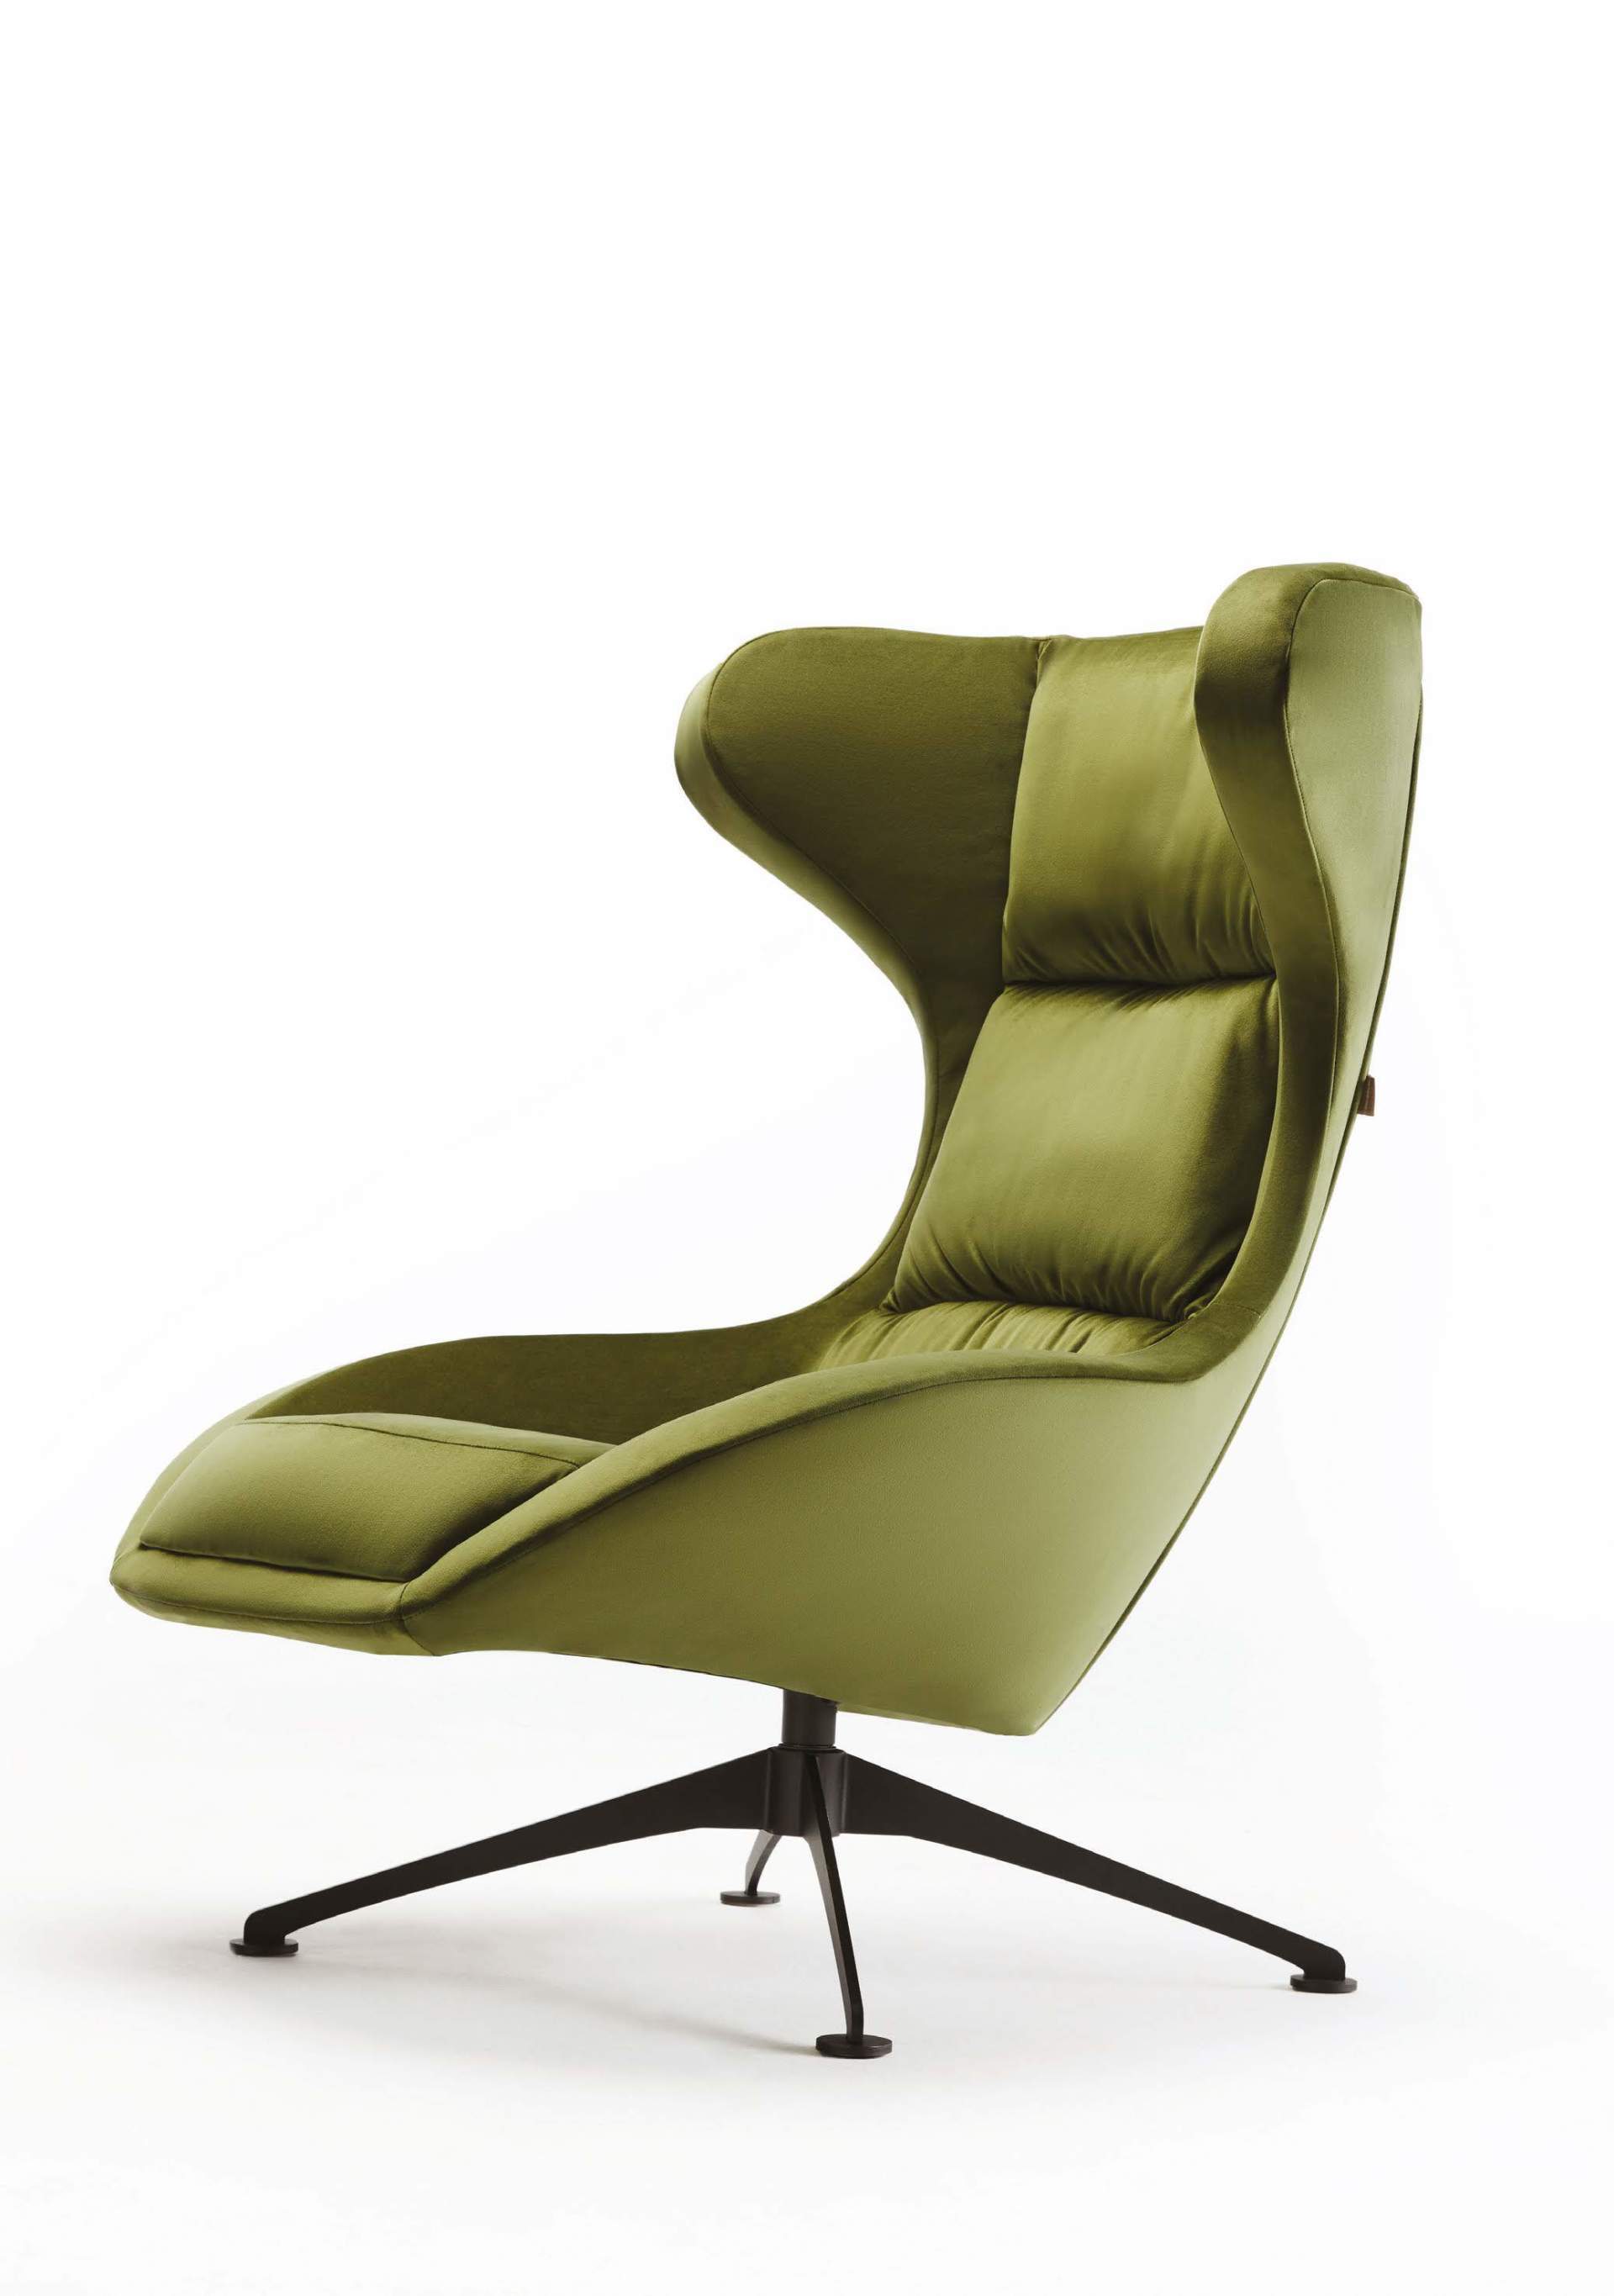 customizable arm chair in green